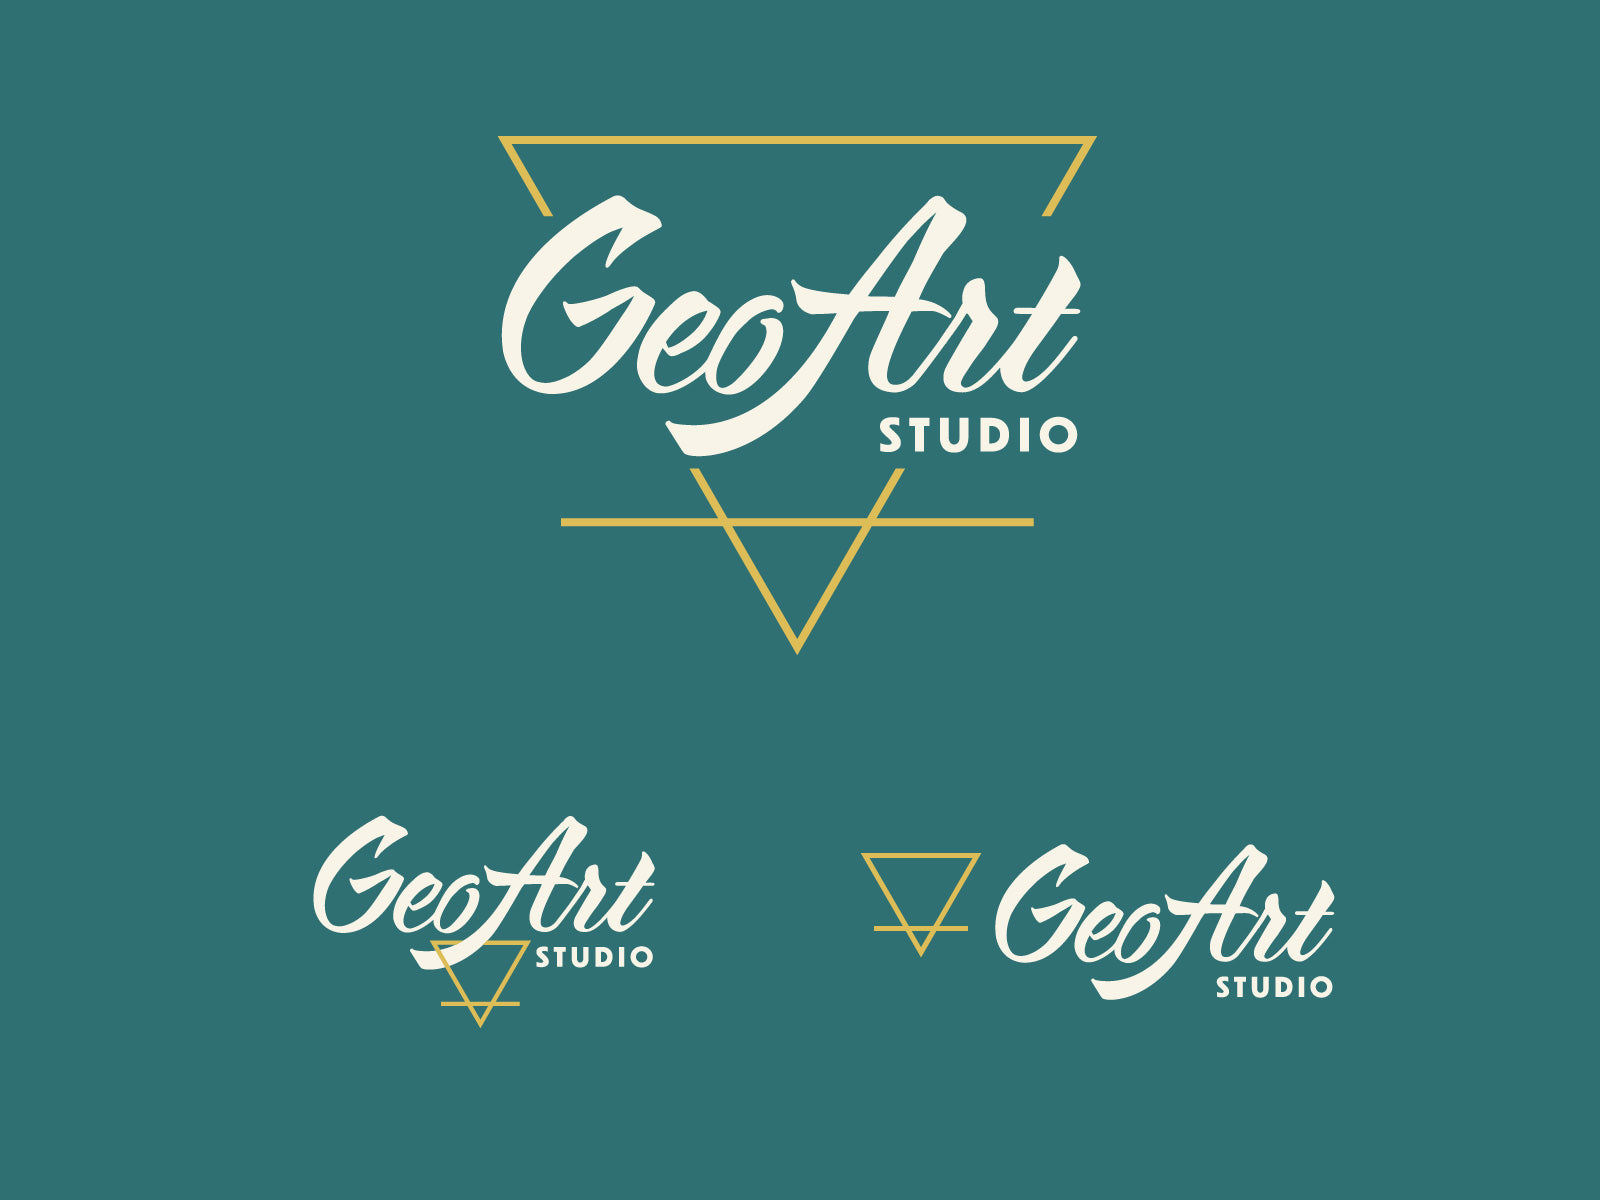 Three versions of the GeoArt Studio logo: horizontal, vertical, and the main logo